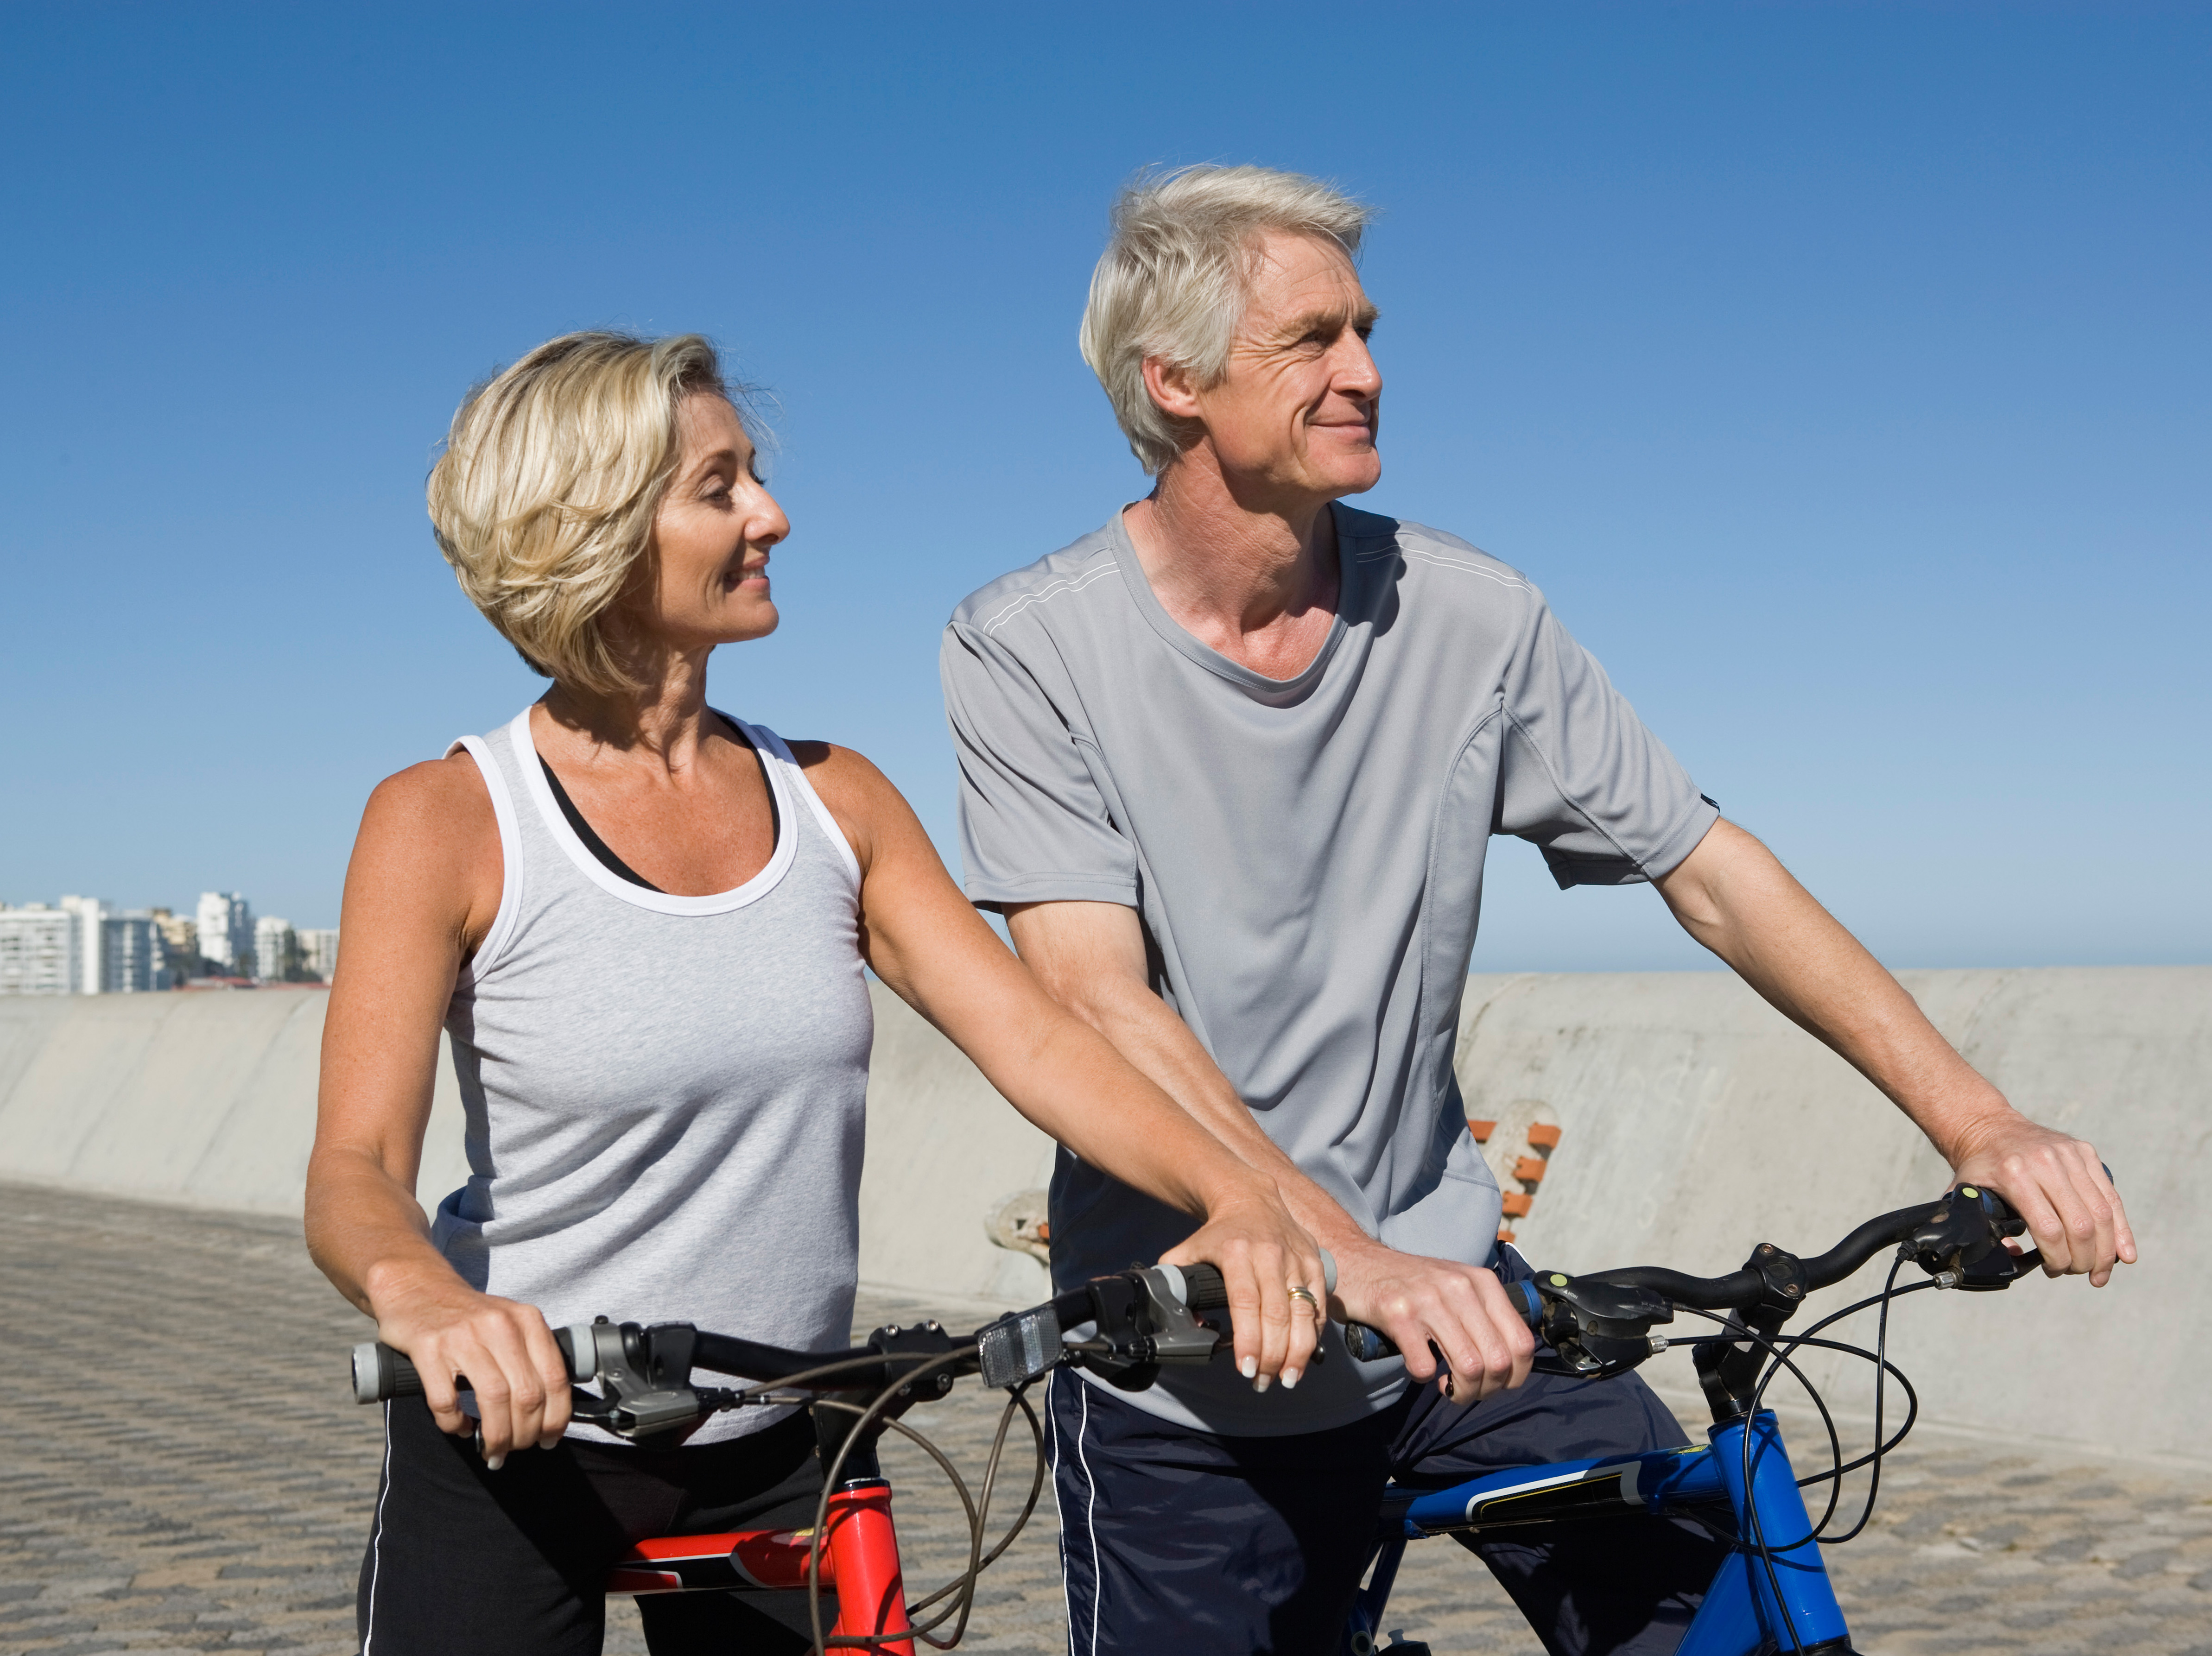 Retire better by avoiding these 4 health risks